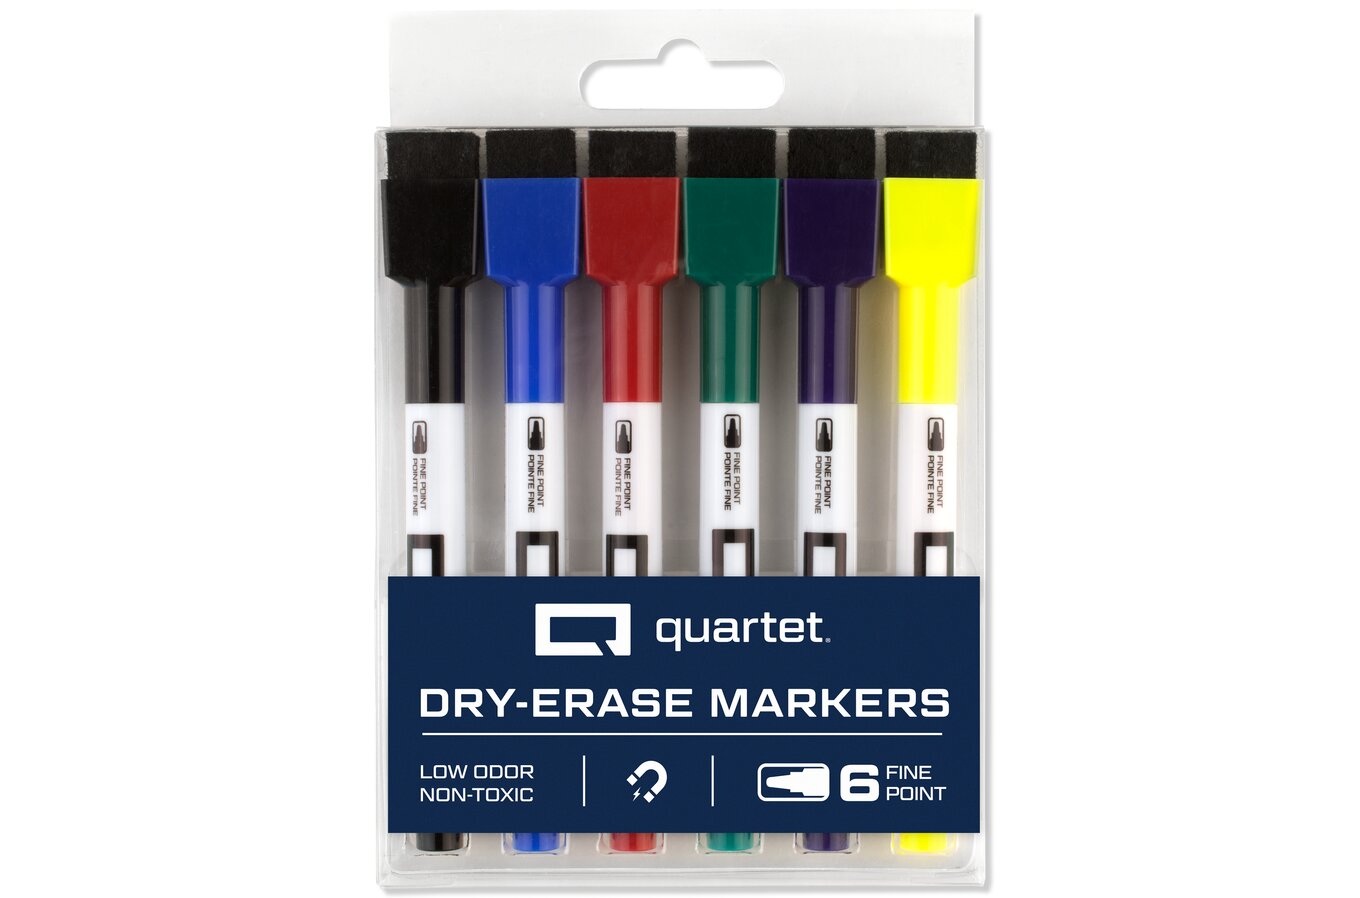 Quartet Neon Dry Erase Paint Markers, 4-Pack – Revolution Lightboards